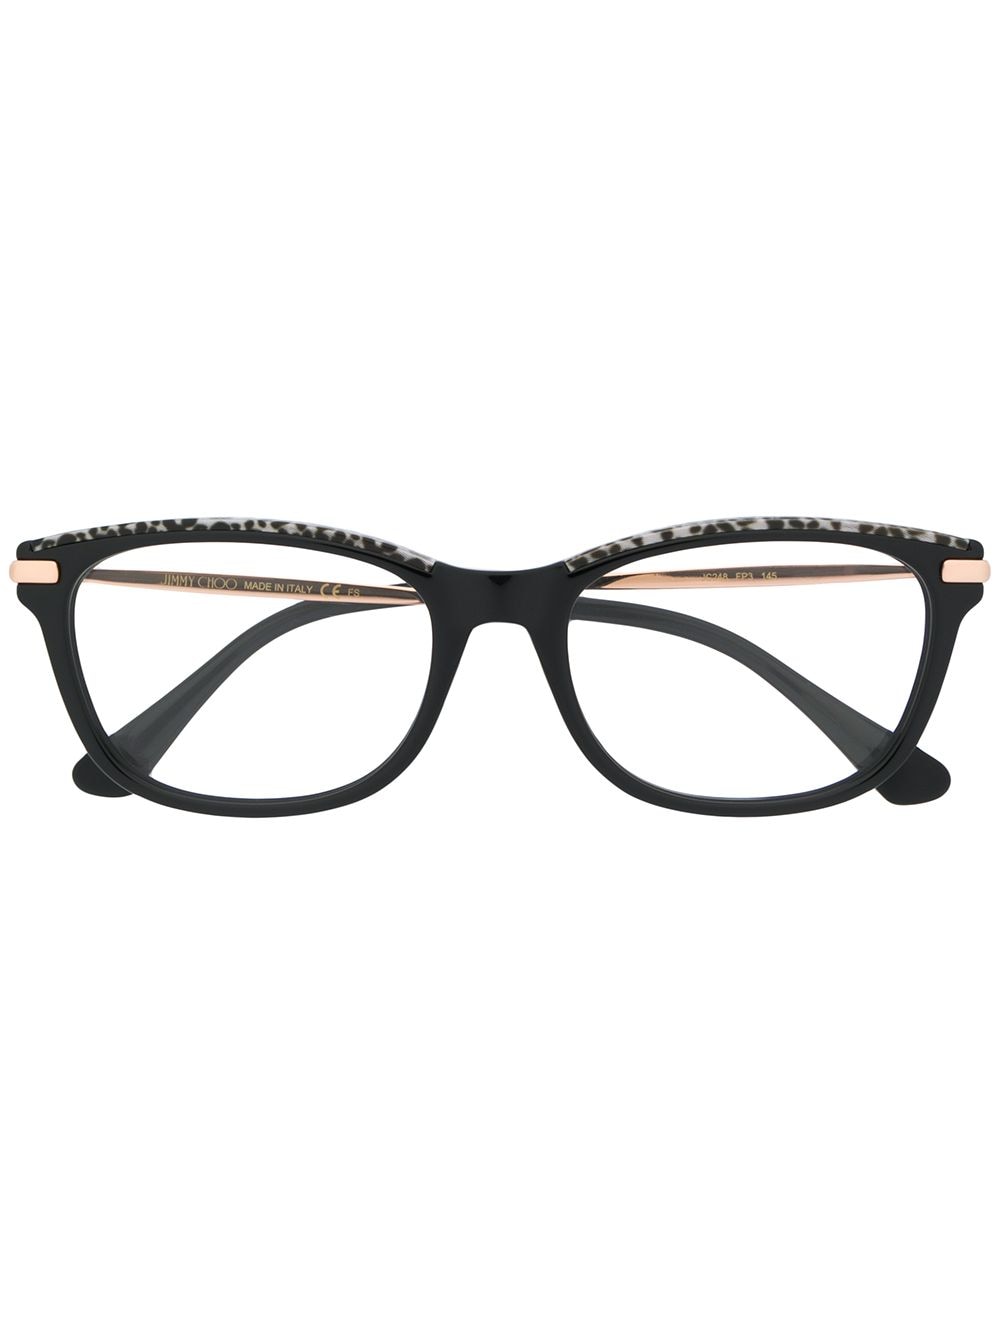 Jimmy Choo Eyewear leopard trim glasses - Black von Jimmy Choo Eyewear